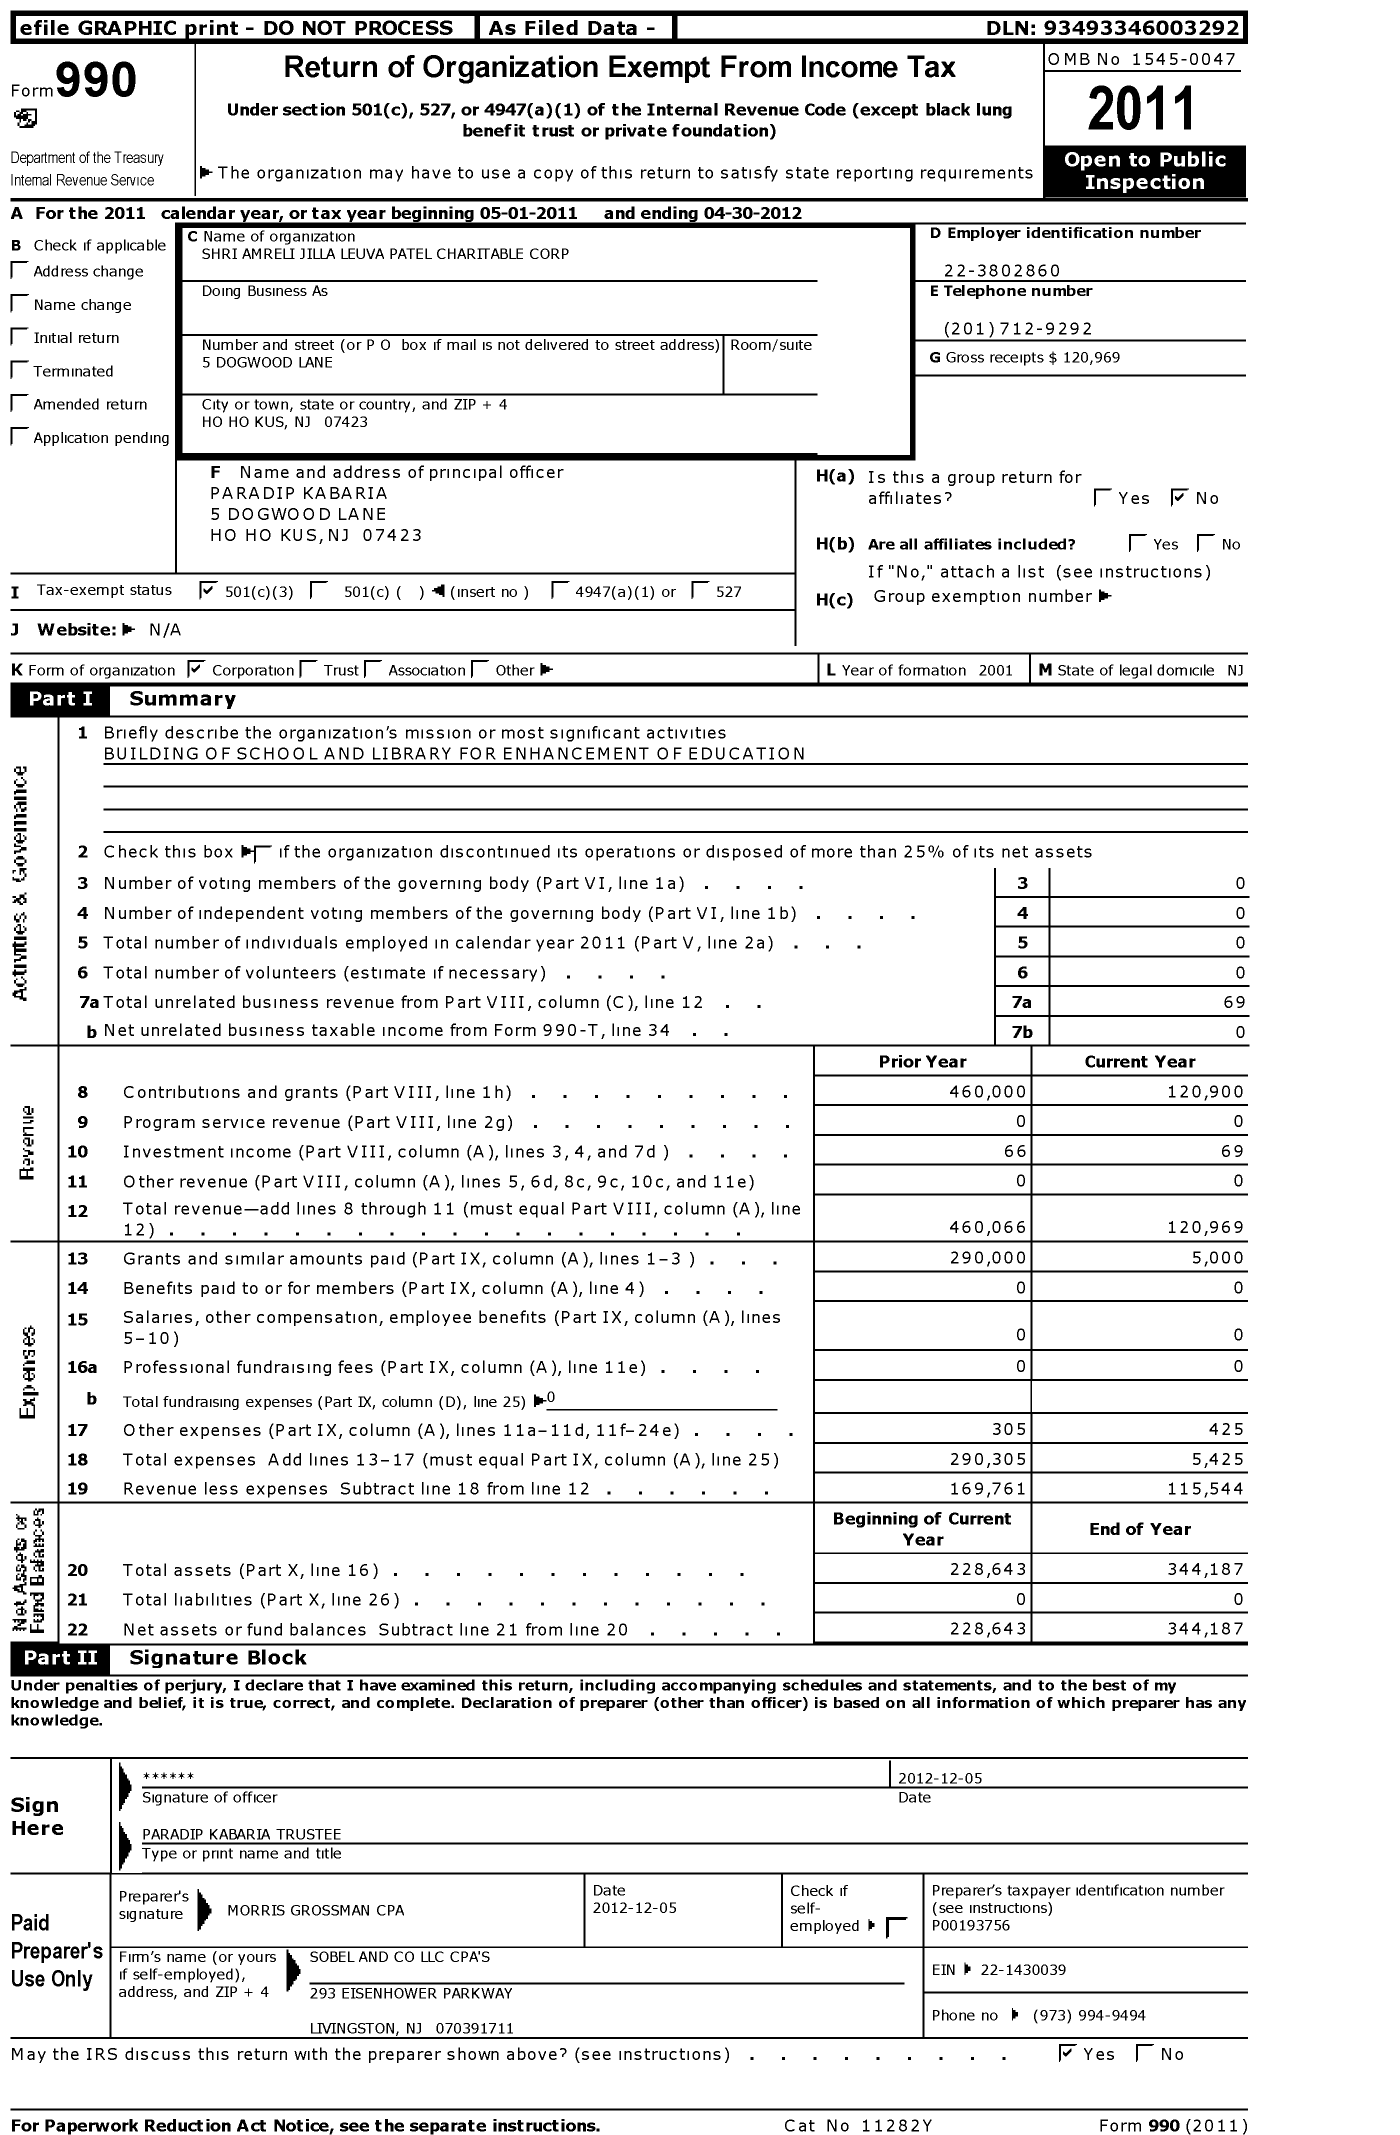 Image of first page of 2011 Form 990 for Shri Amreli Jilla Leuva Patel Charitable Corporation